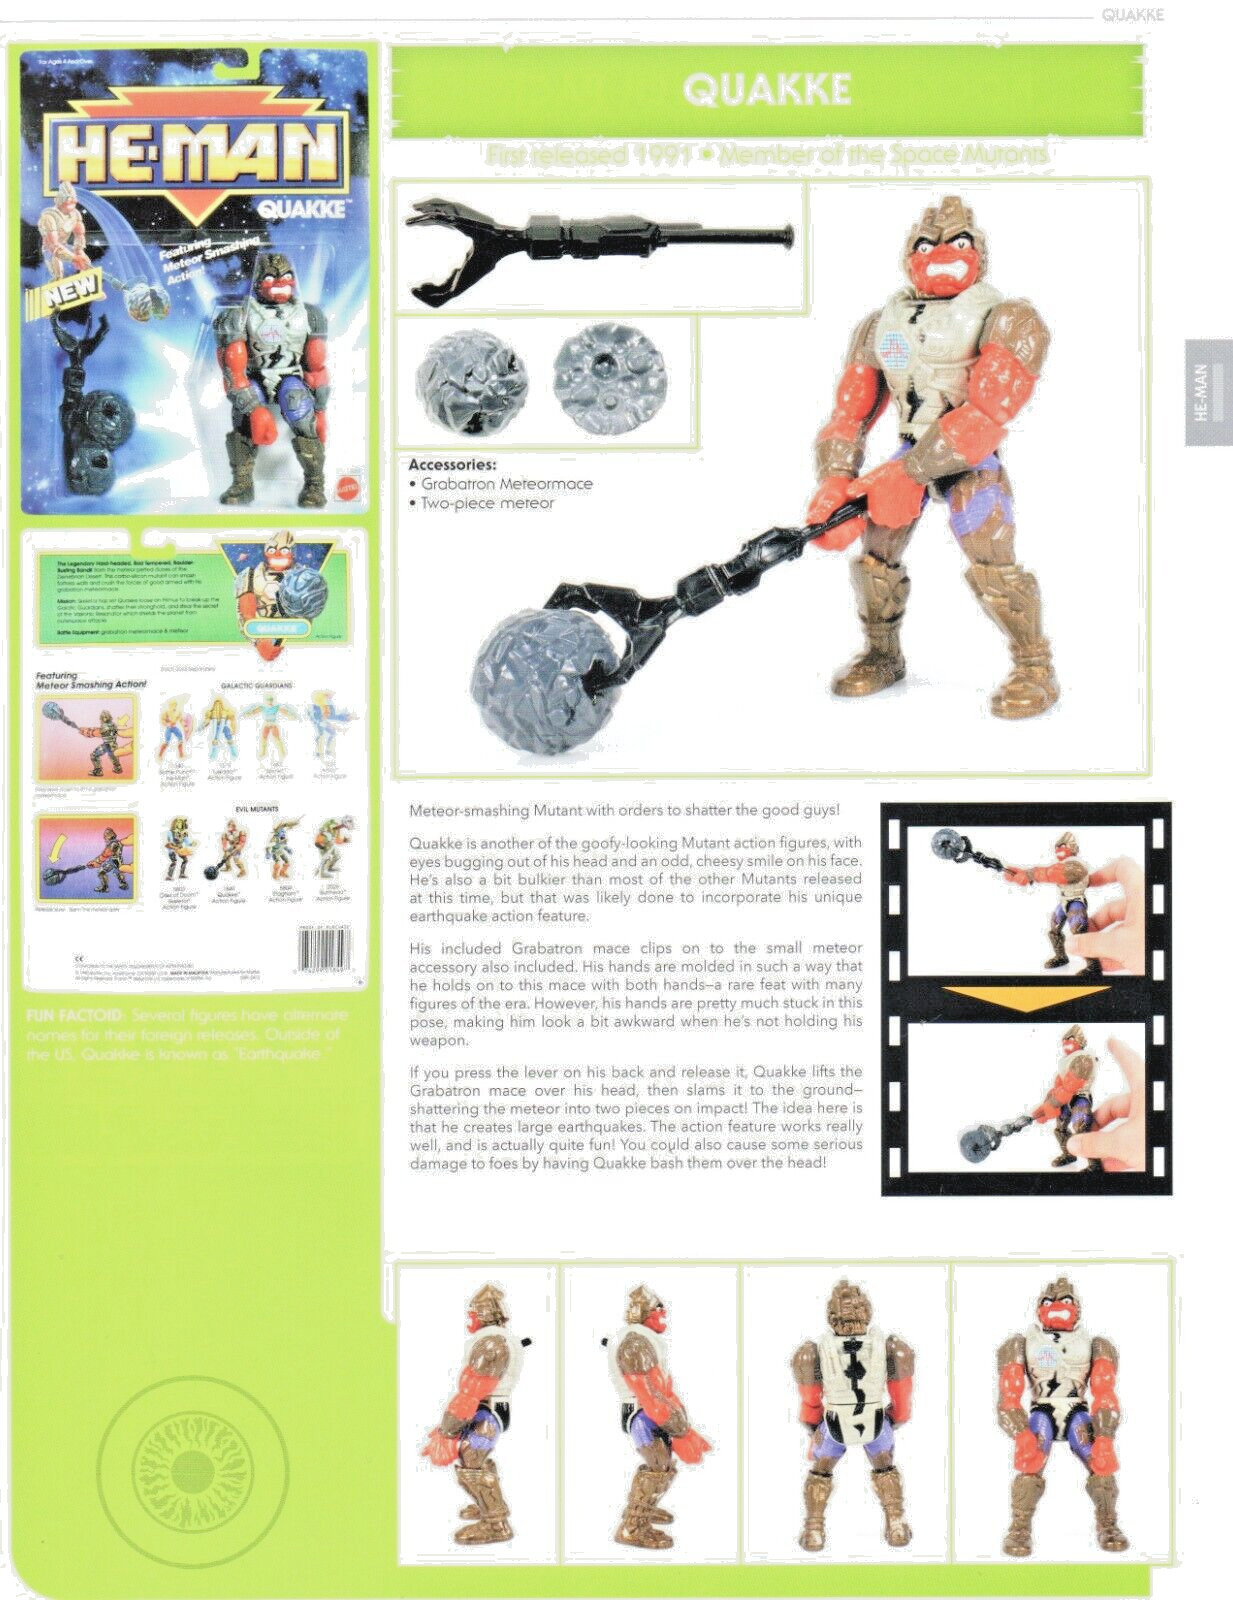 HE-MAN MOTU QUAKKE Character Action Figure Pin-Up PRINT AD/POSTER 9x12 ART